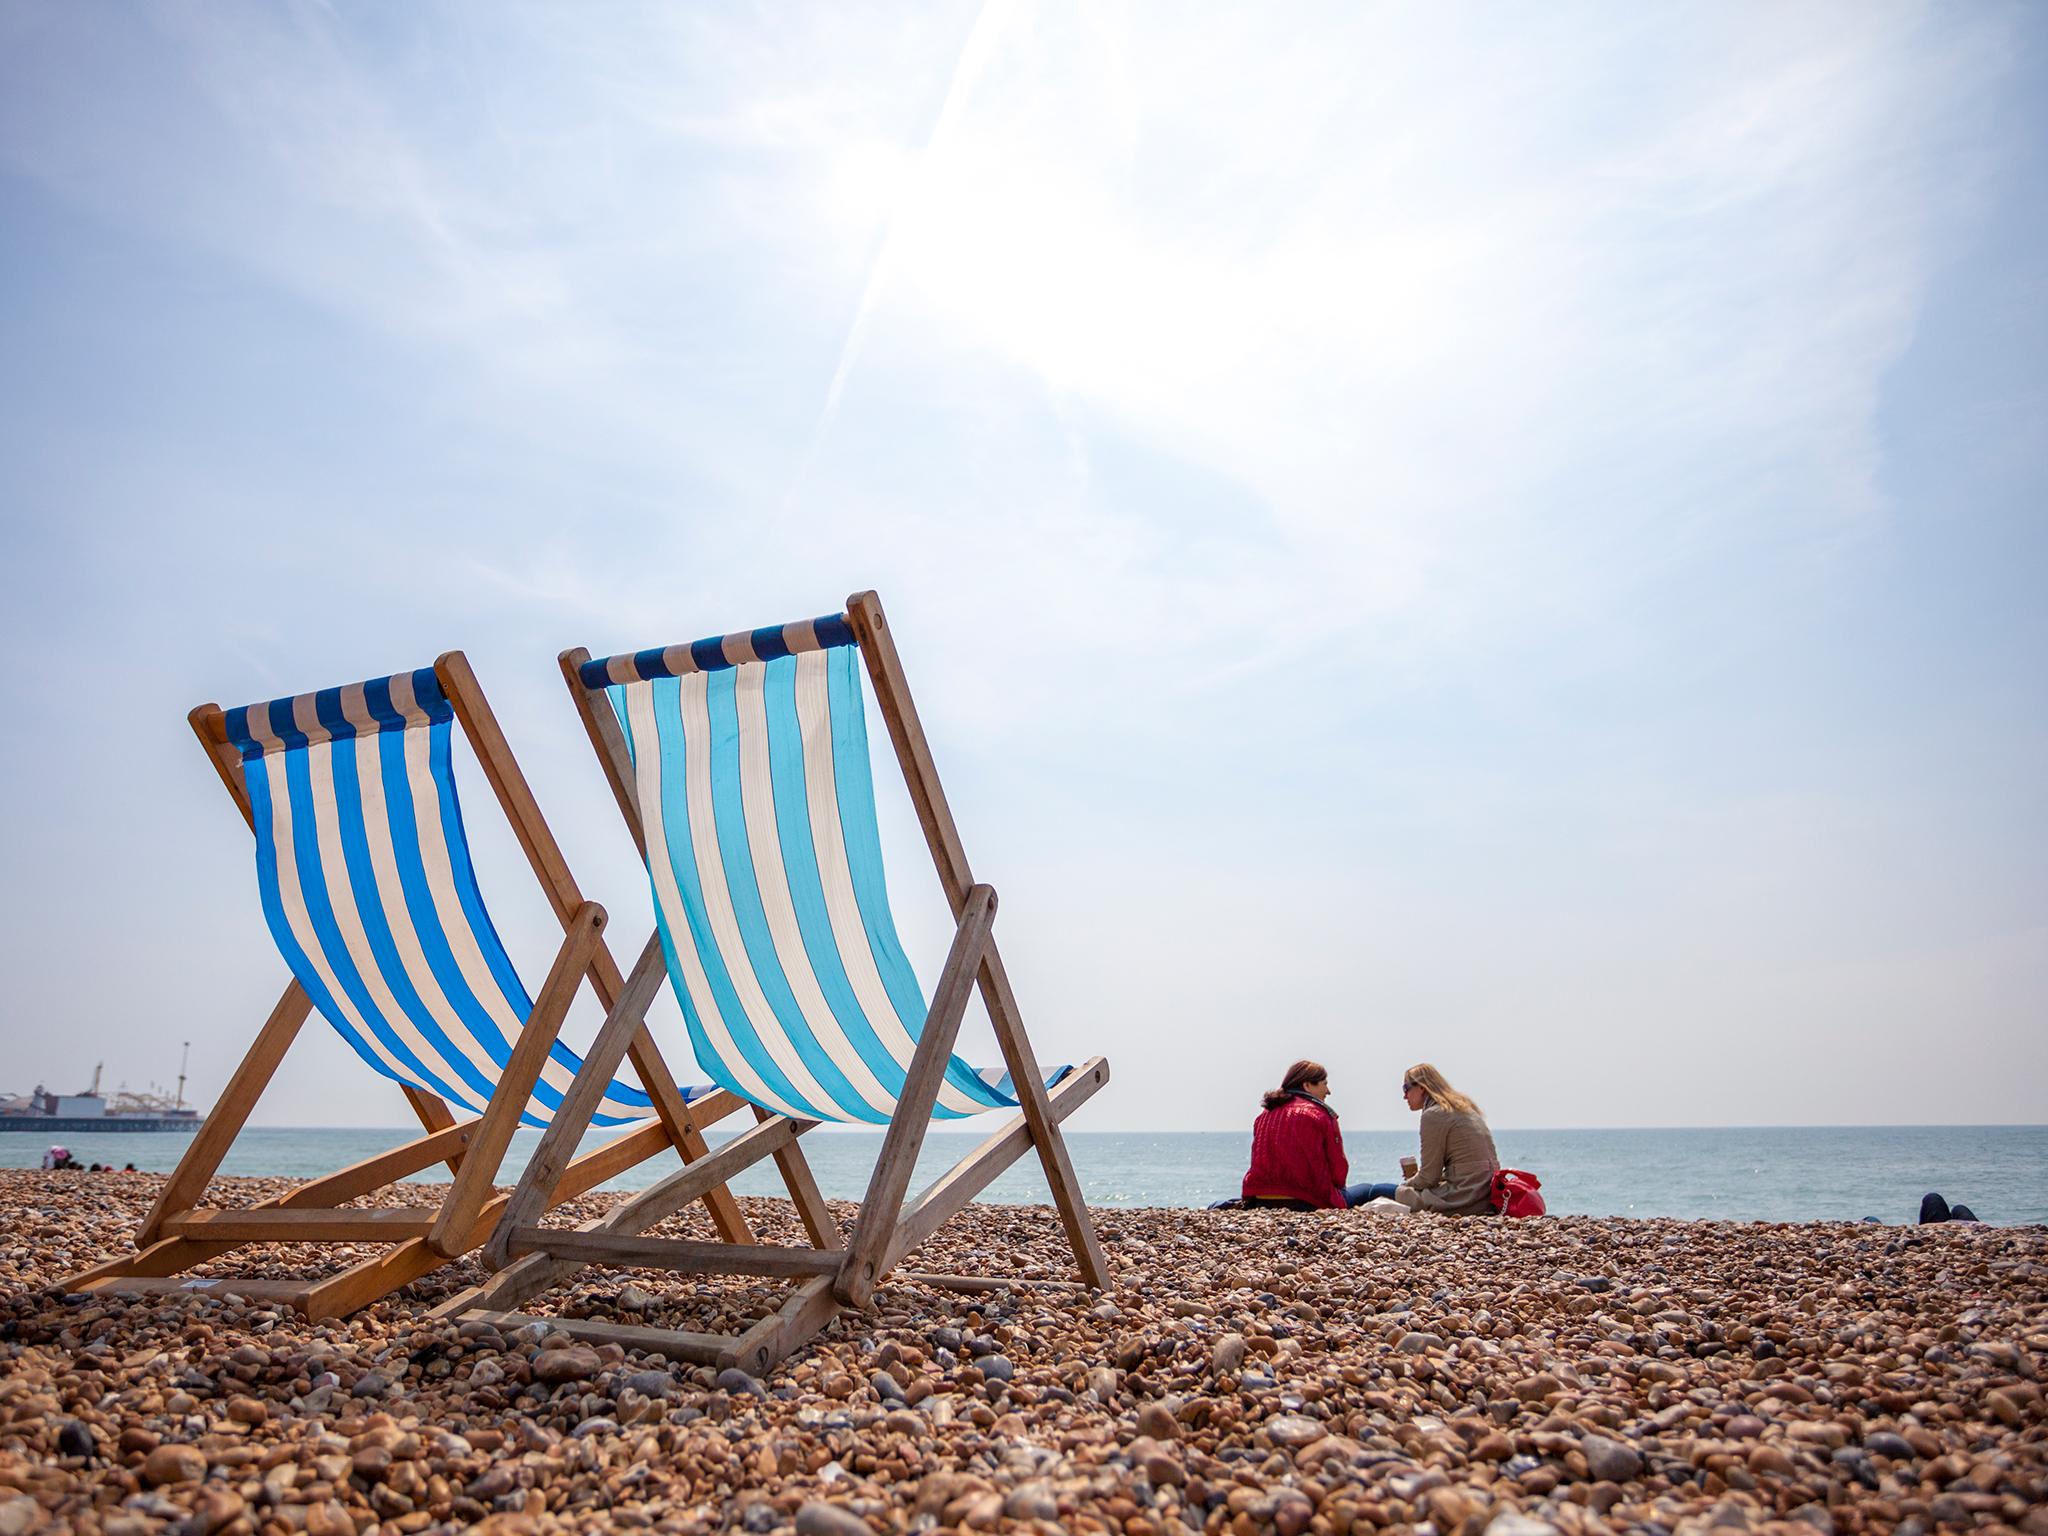 Brighton's beach isn't ideal for barefoot walking